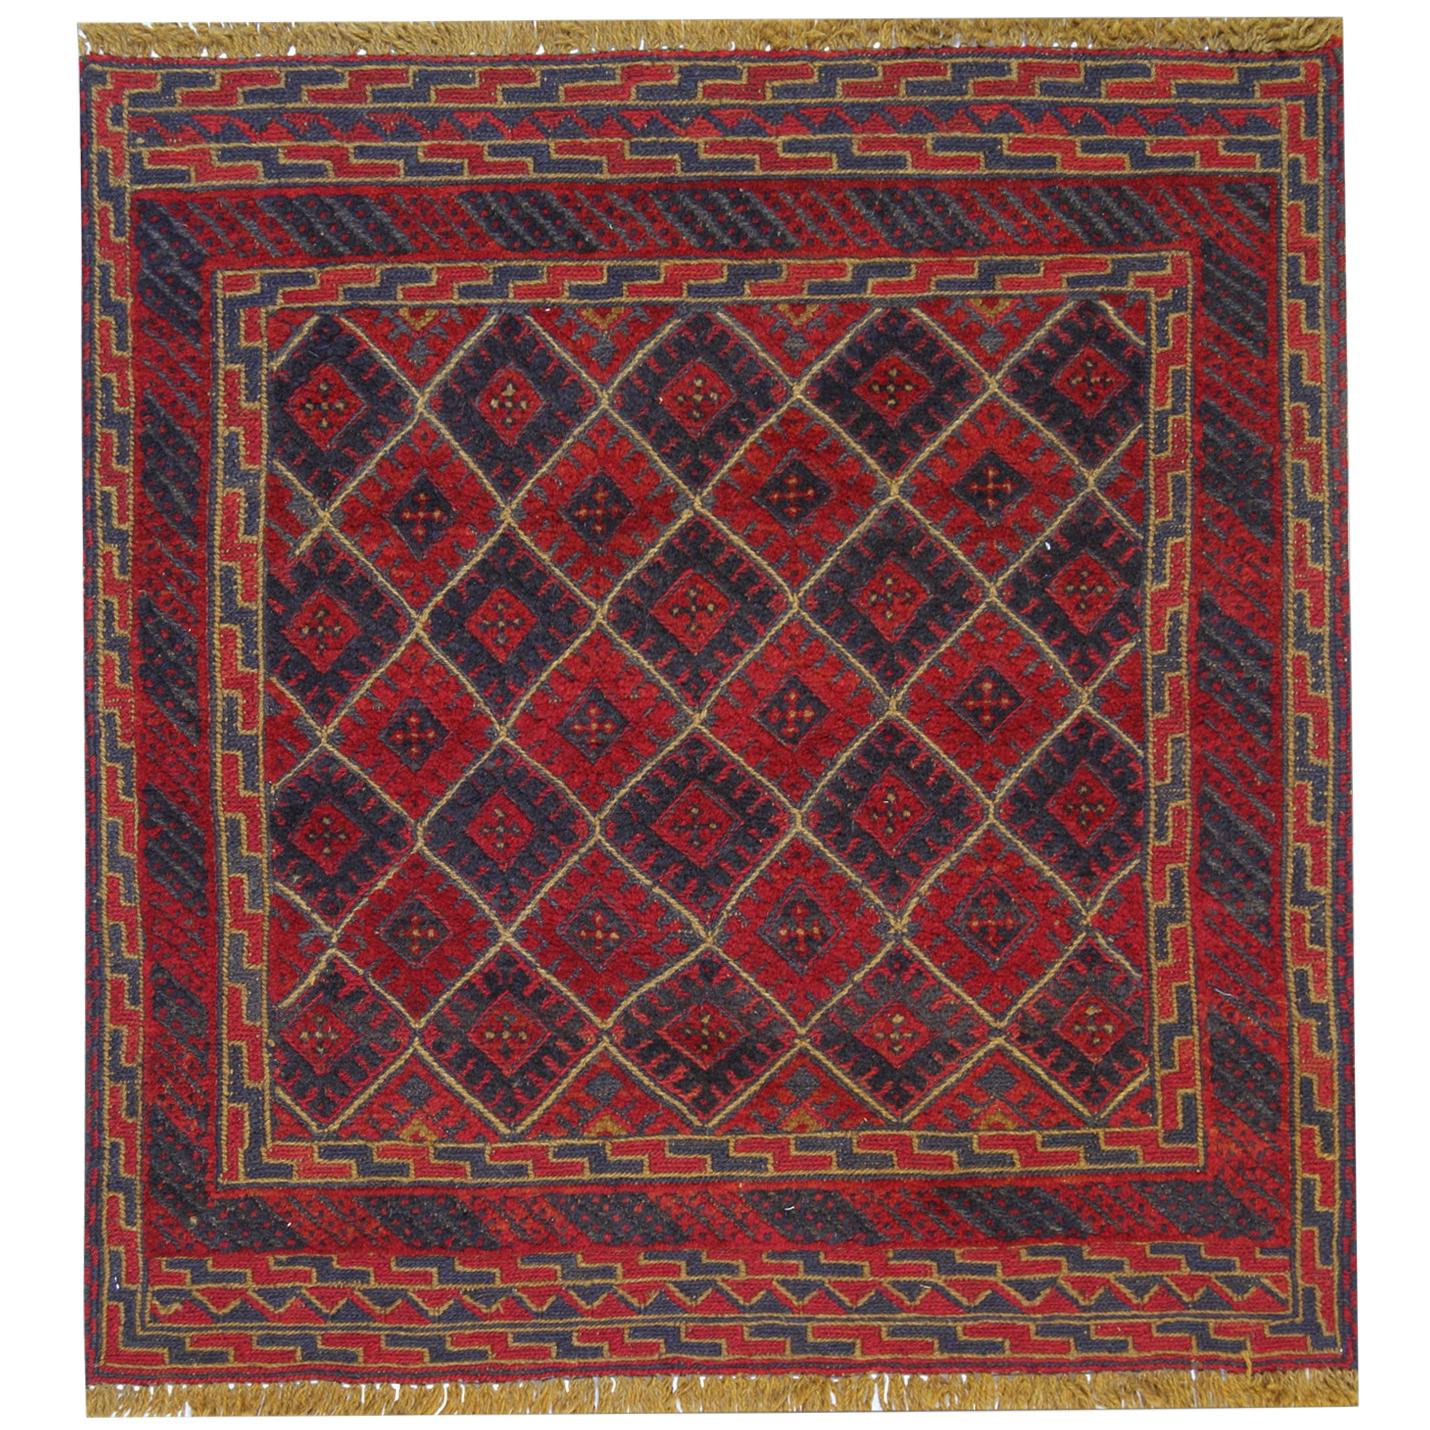 Handmade Carpet Oriental Rug Traditional Deep Red Rugs Square Turkmen Design 